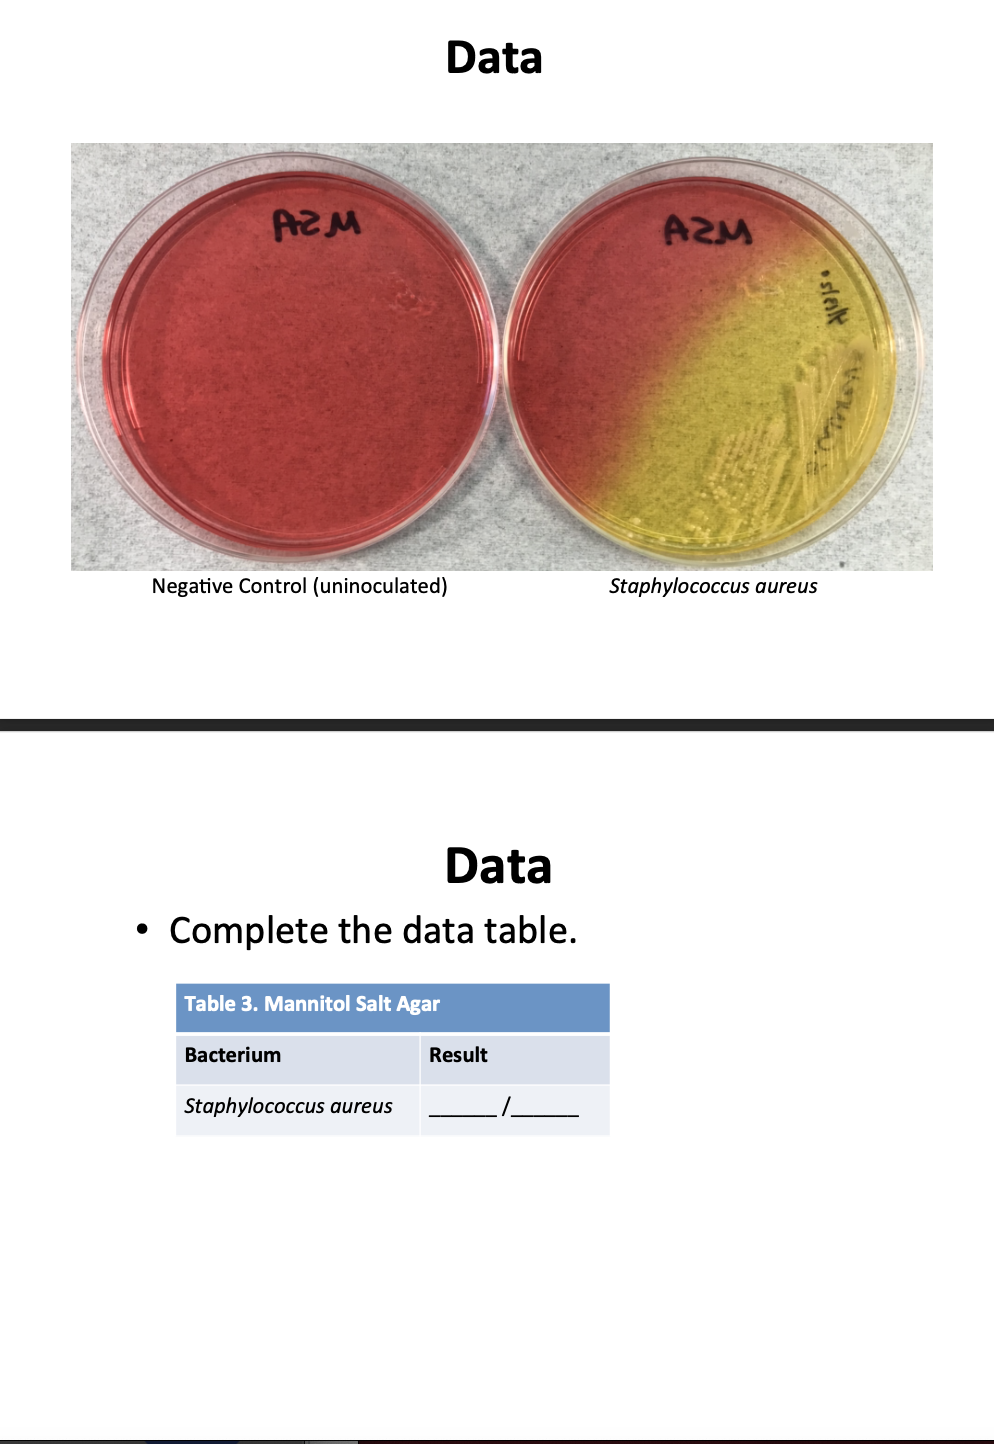 Data
AZM
Negative Control (uninoculated)
Staphylococcus aureus
Data
Complete the data table.
Table 3. Mannitol Salt Agar
Bacterium
Result
Staphylococcus aureus
•slelt
